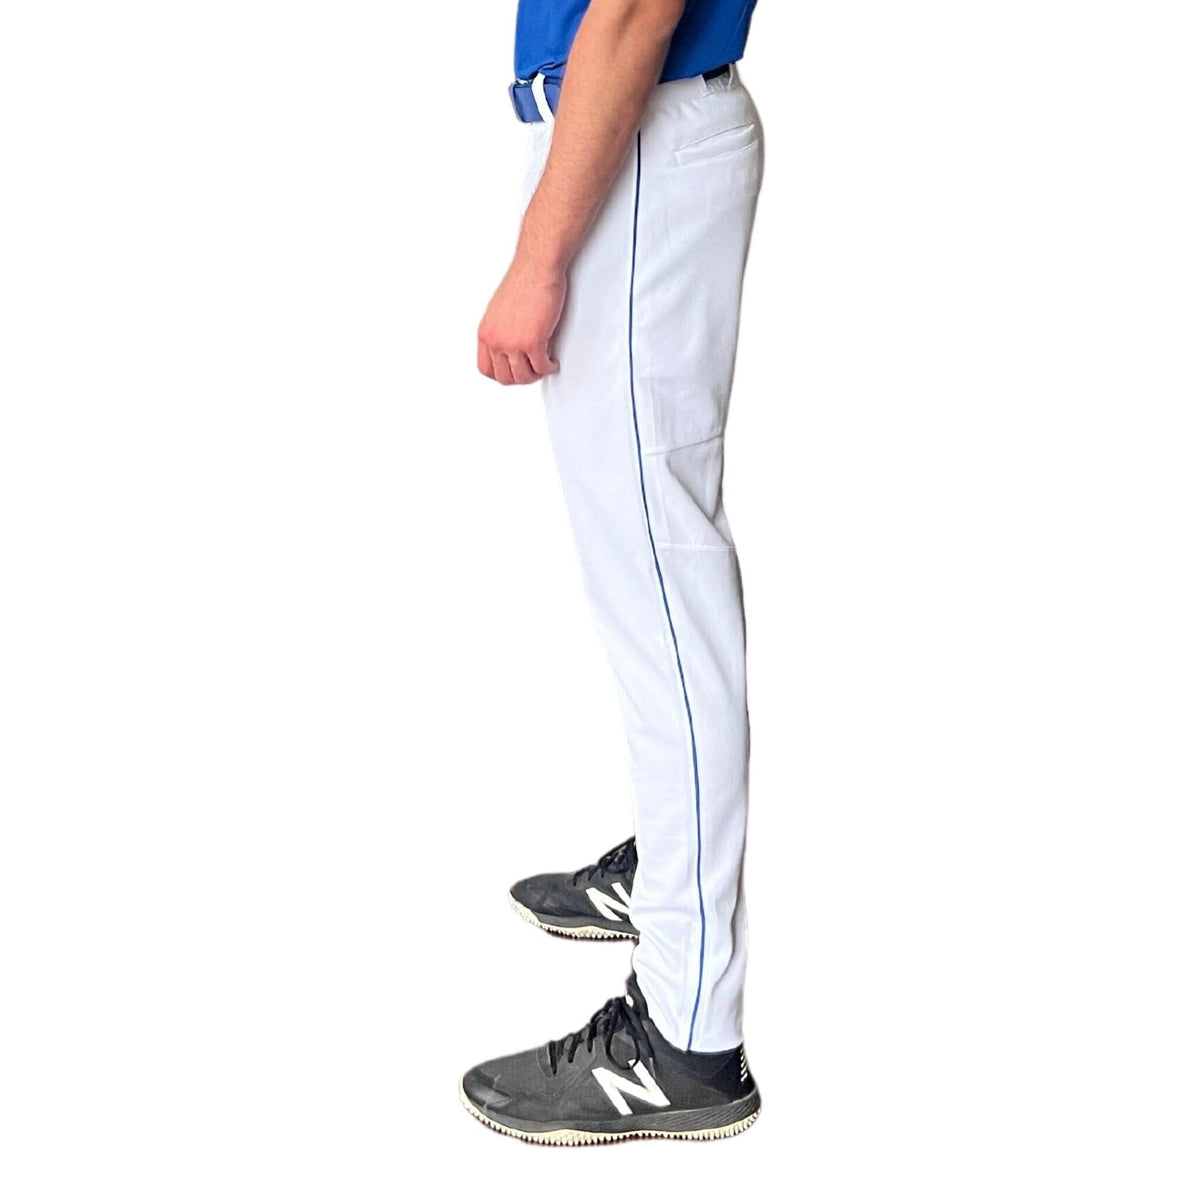 Nike Baseball Pants Men's White/Light Blue Used XS